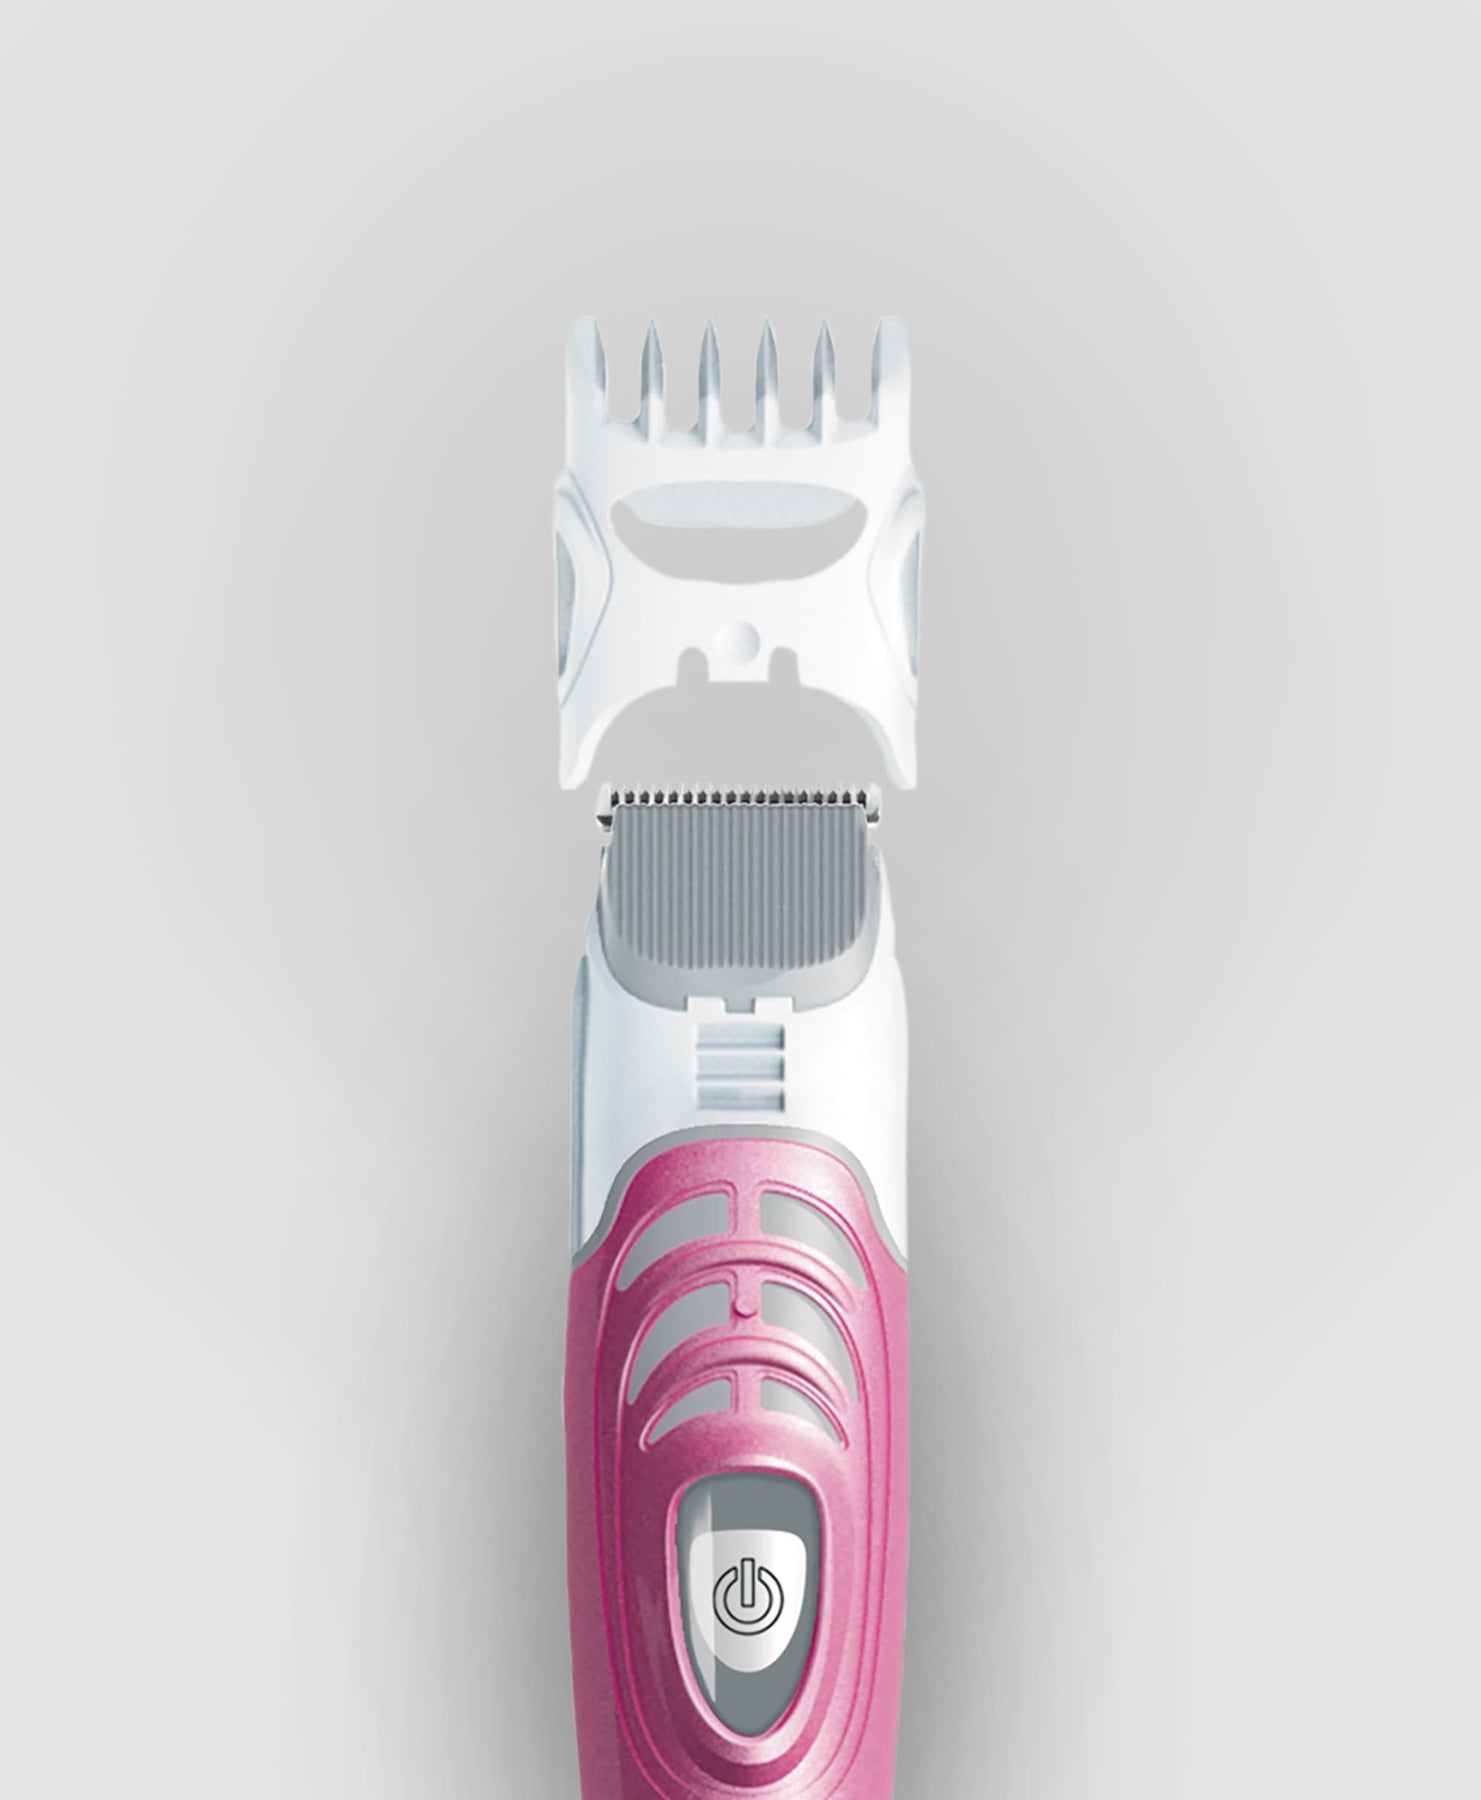 schick trimstyle razor